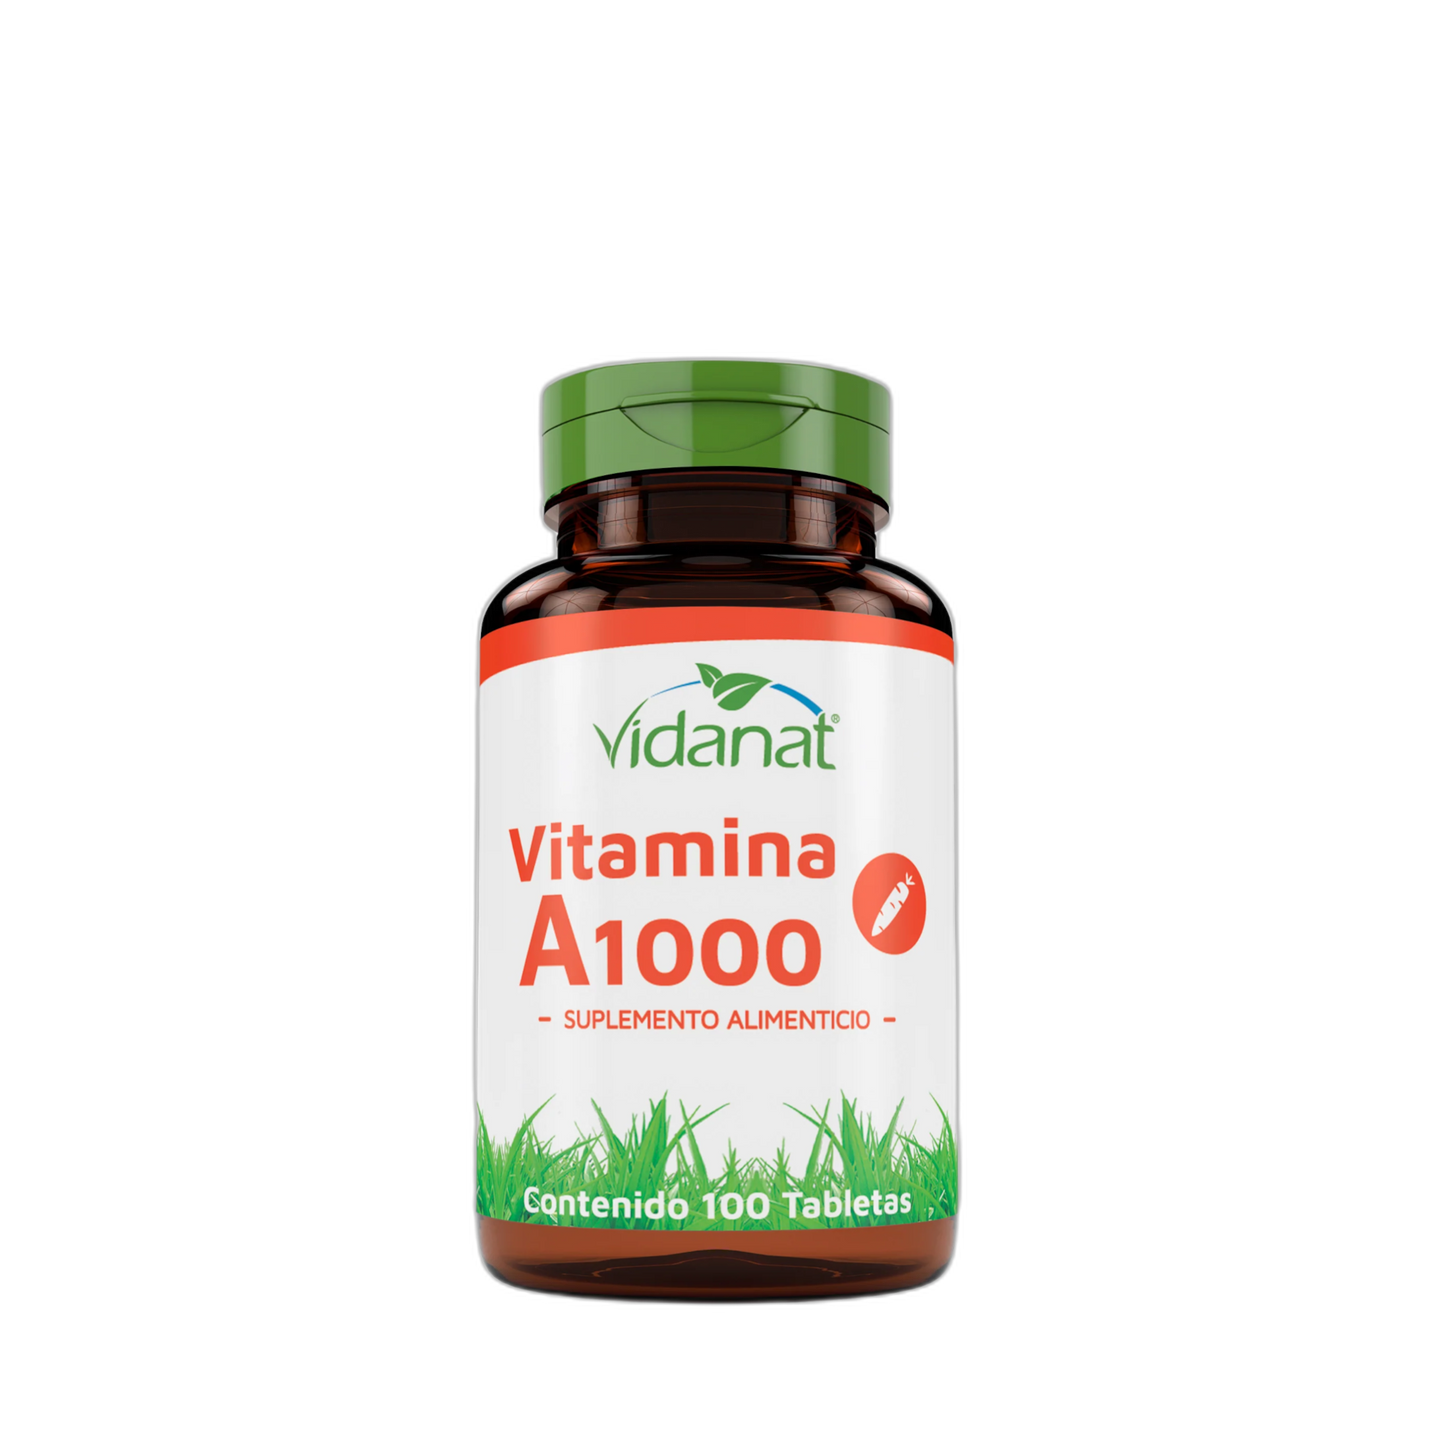 Vitanina A1000